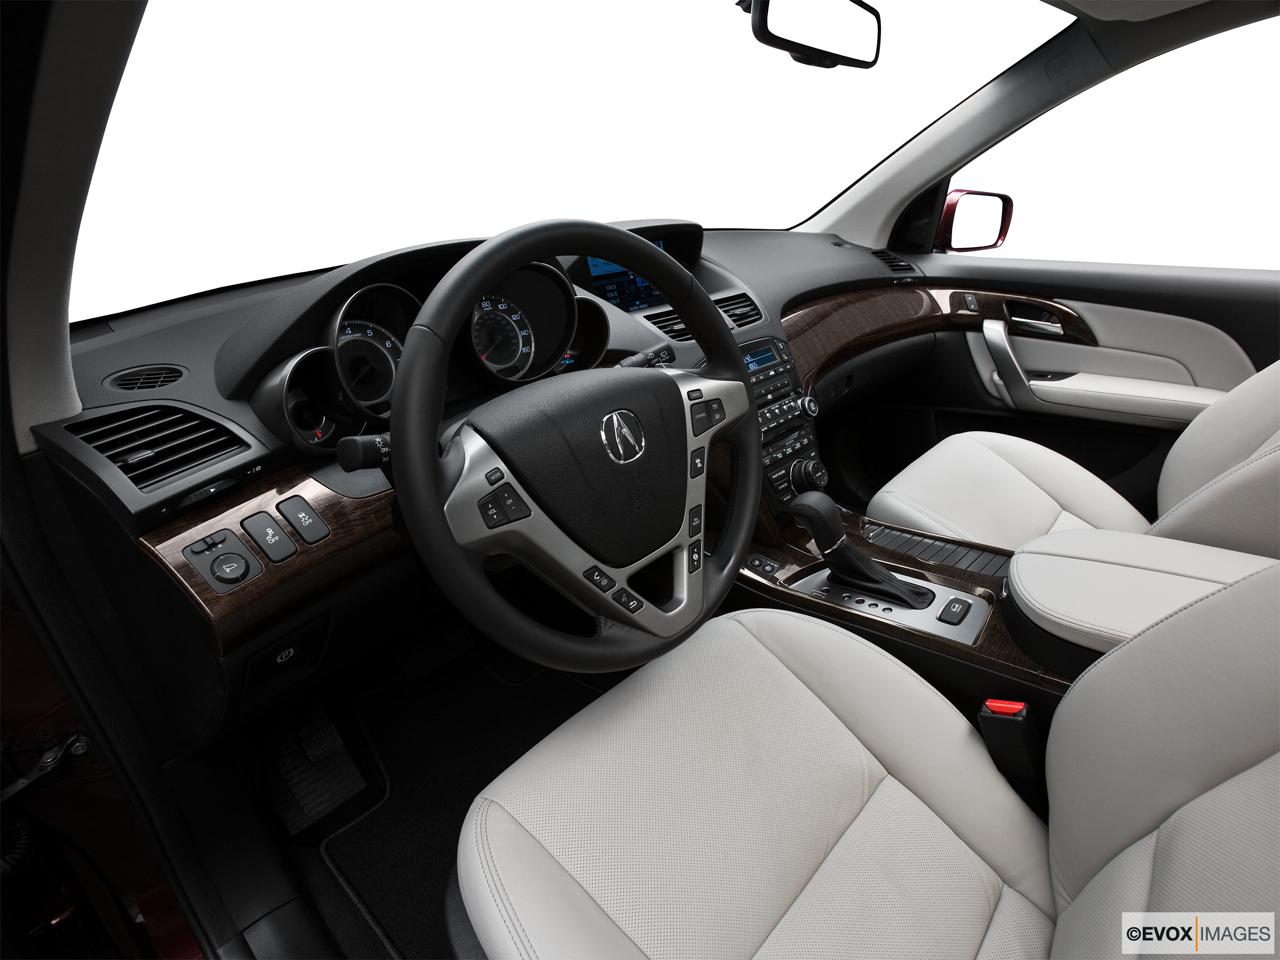 2010 Acura MDX MDX Interior Hero (driver's side). 